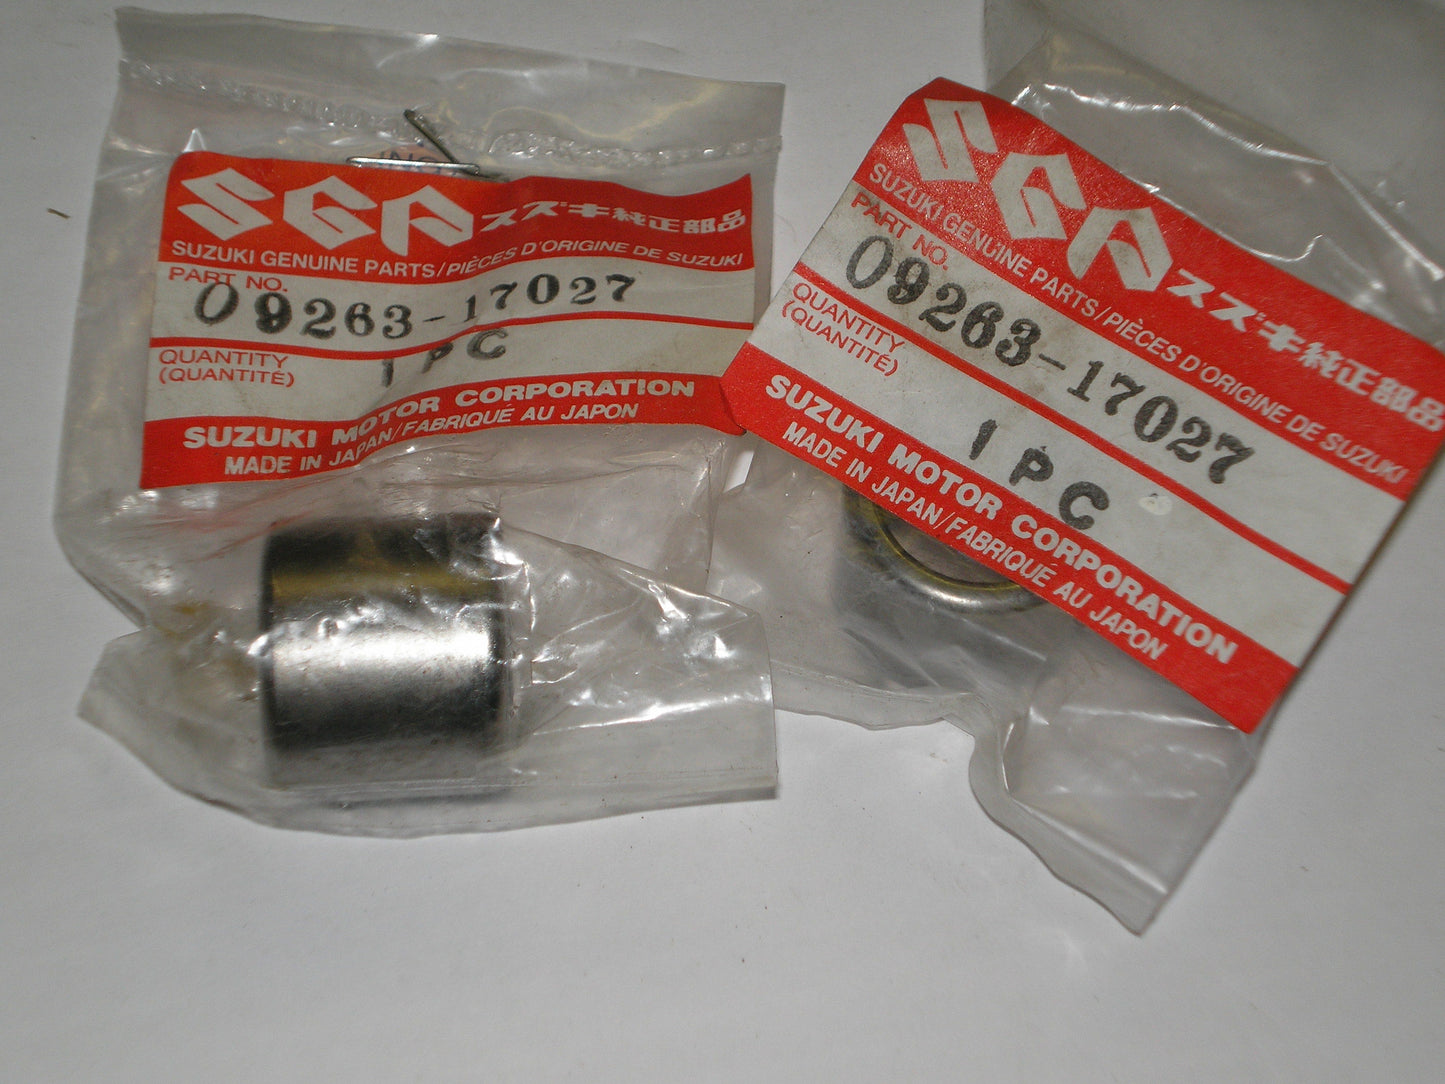 SUZUKI GR650 GS550 GS750 GS1100 GS GSX PE175 RM RS XN Shock Bearings 09263-17027